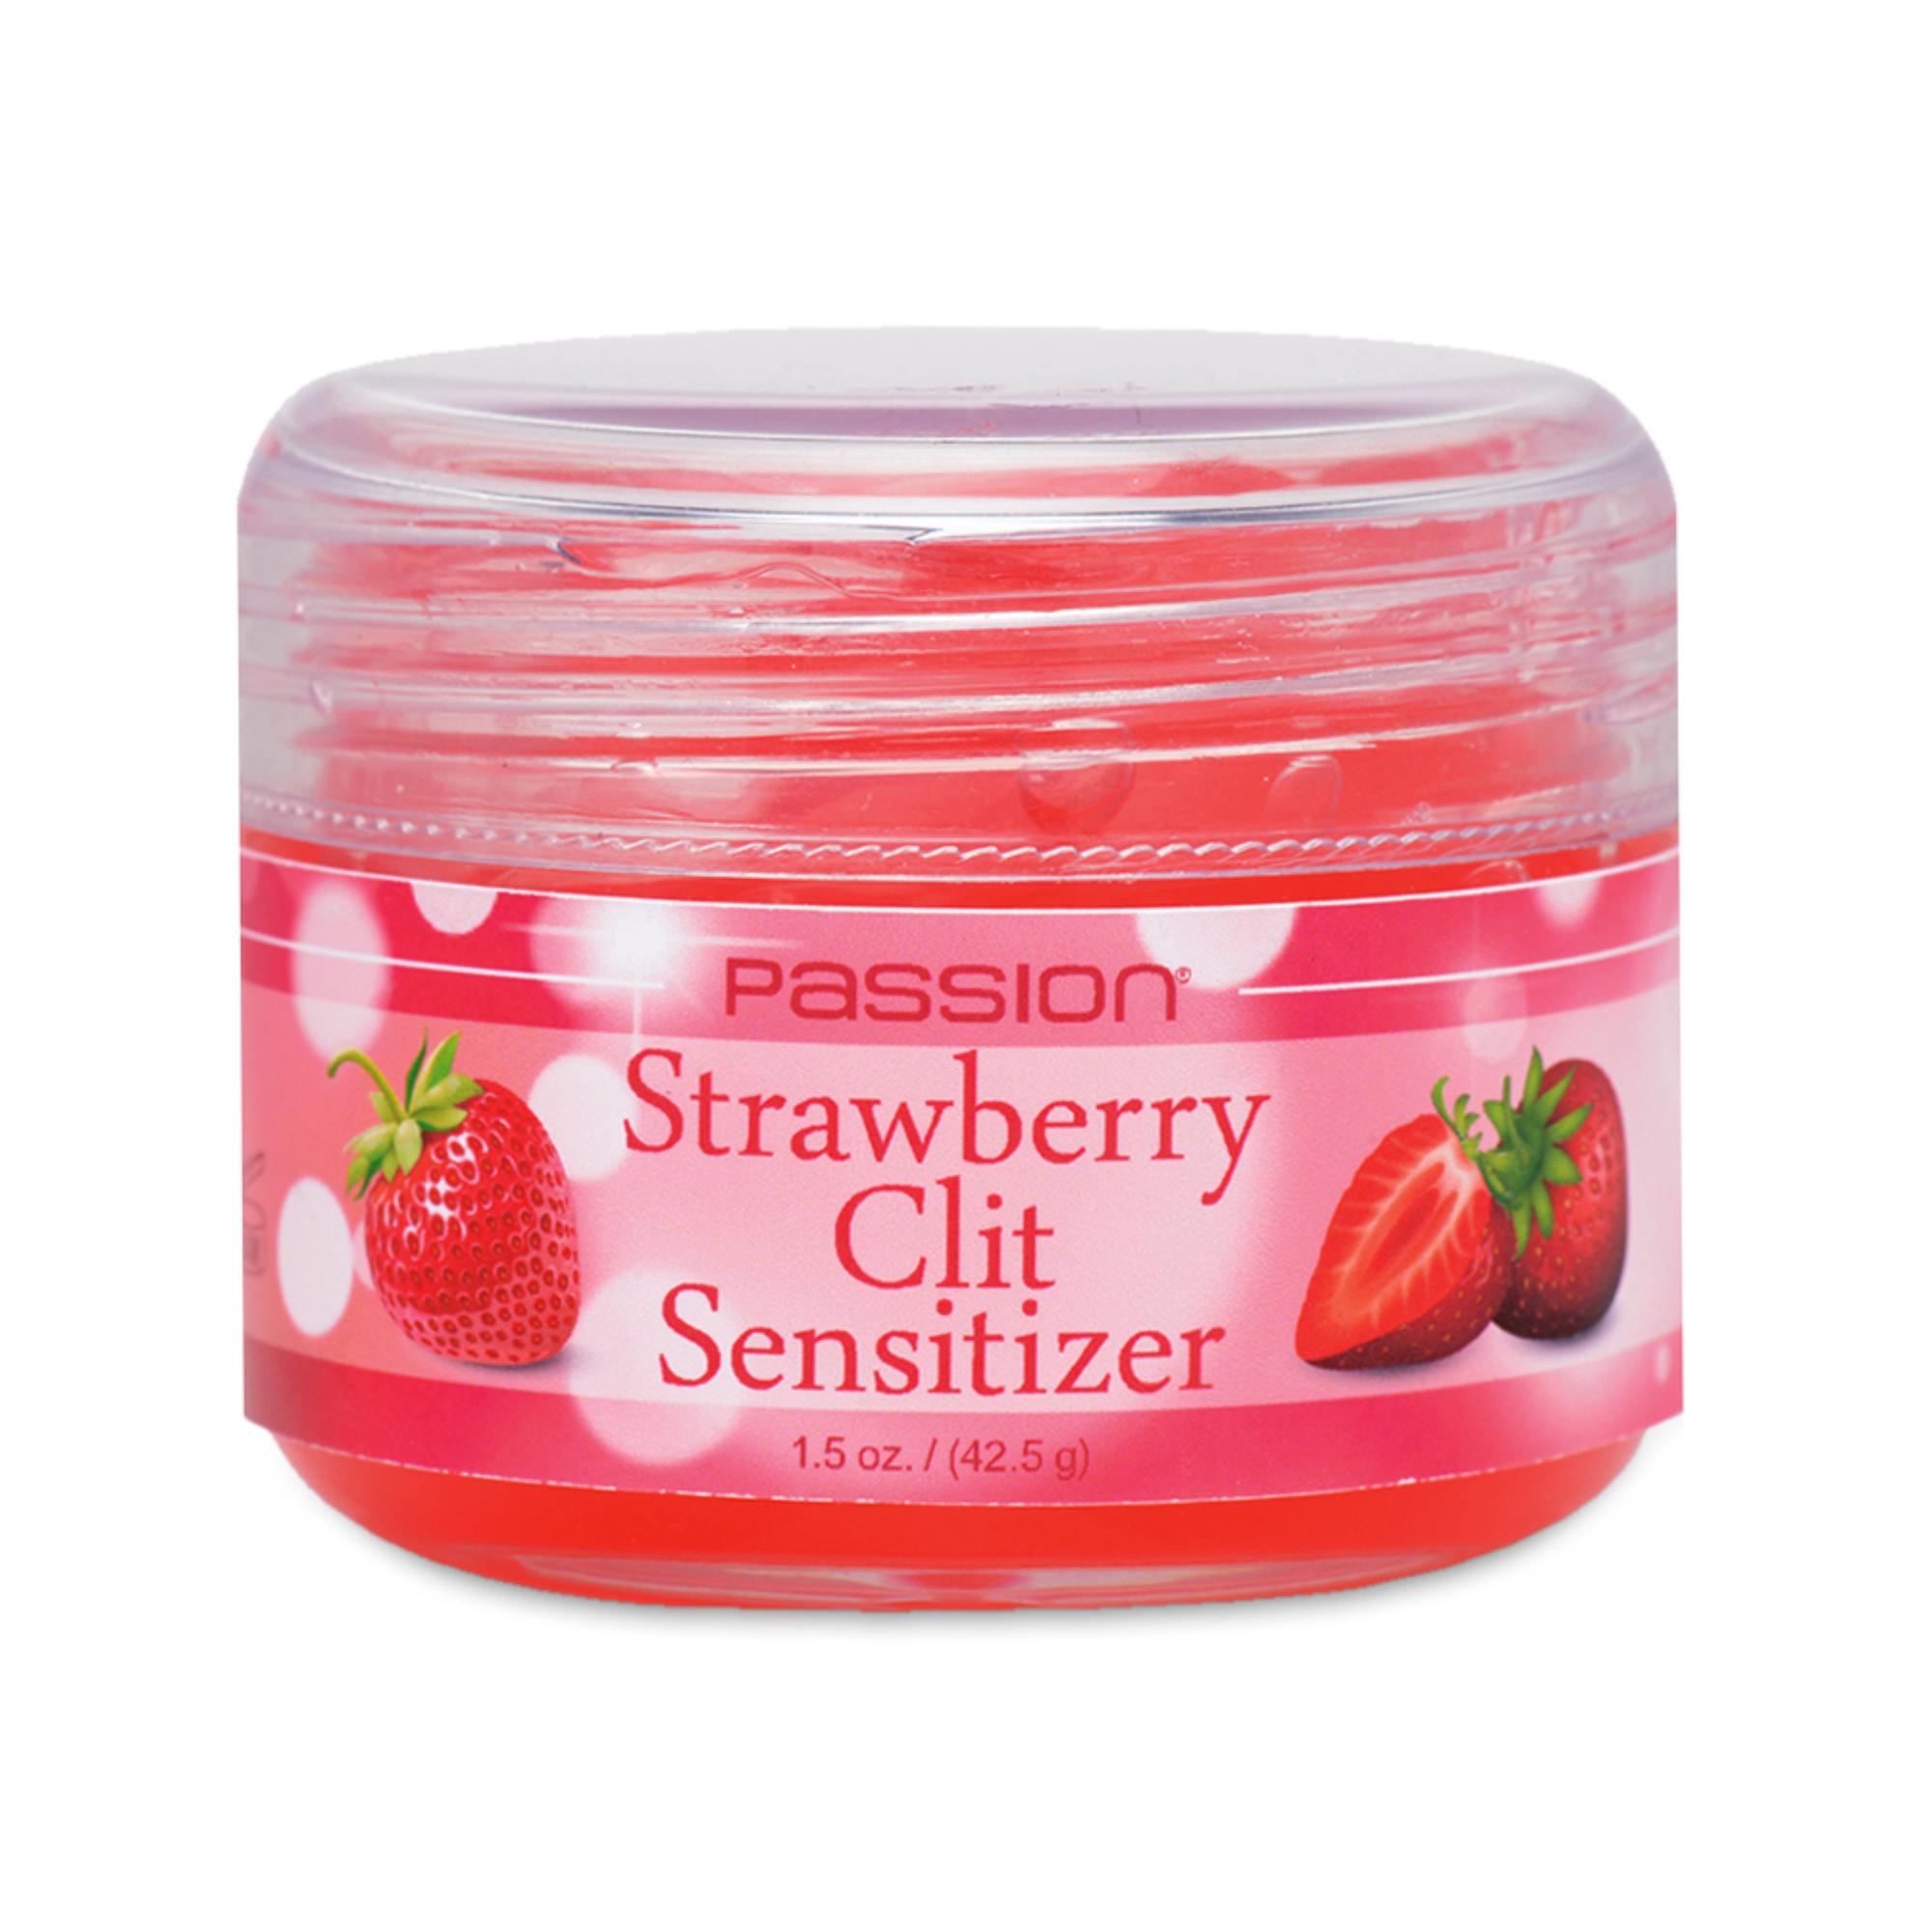 Passion Lubricants Passion Strawberry Clit Sensitizer- 1.5oz